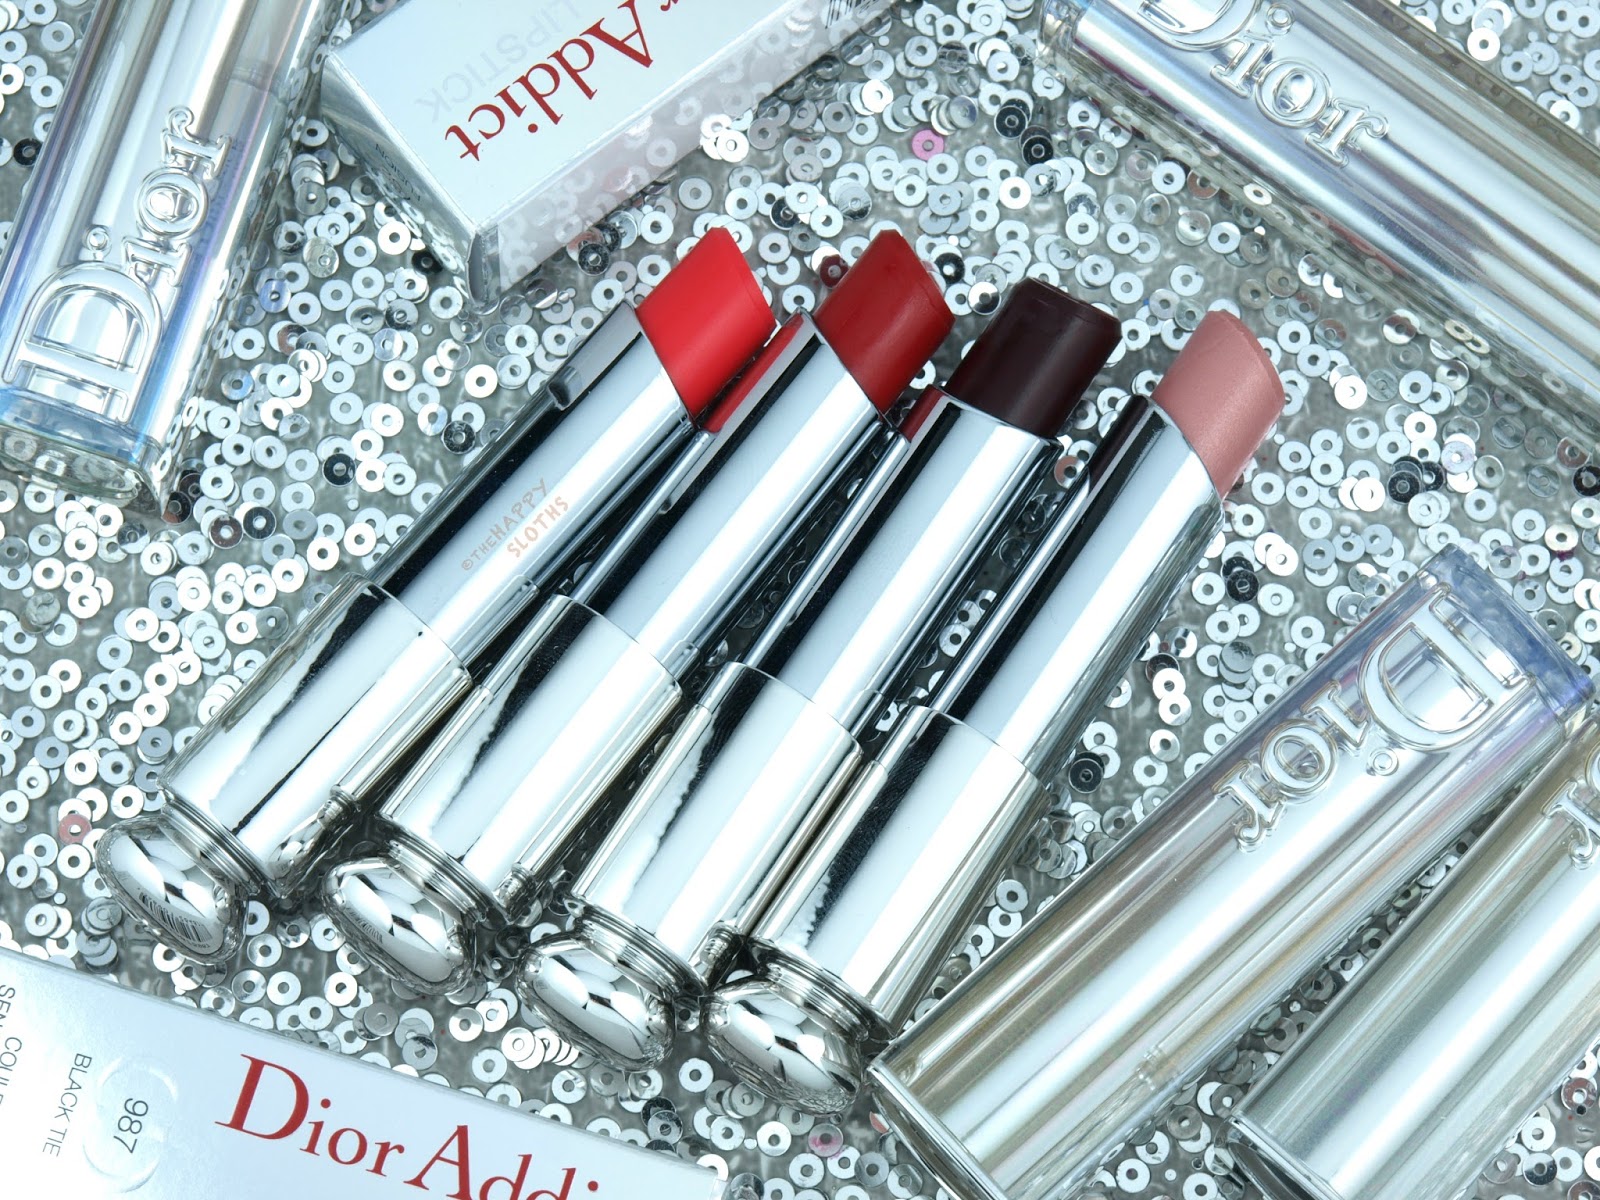 dior addict lipstick review 2016